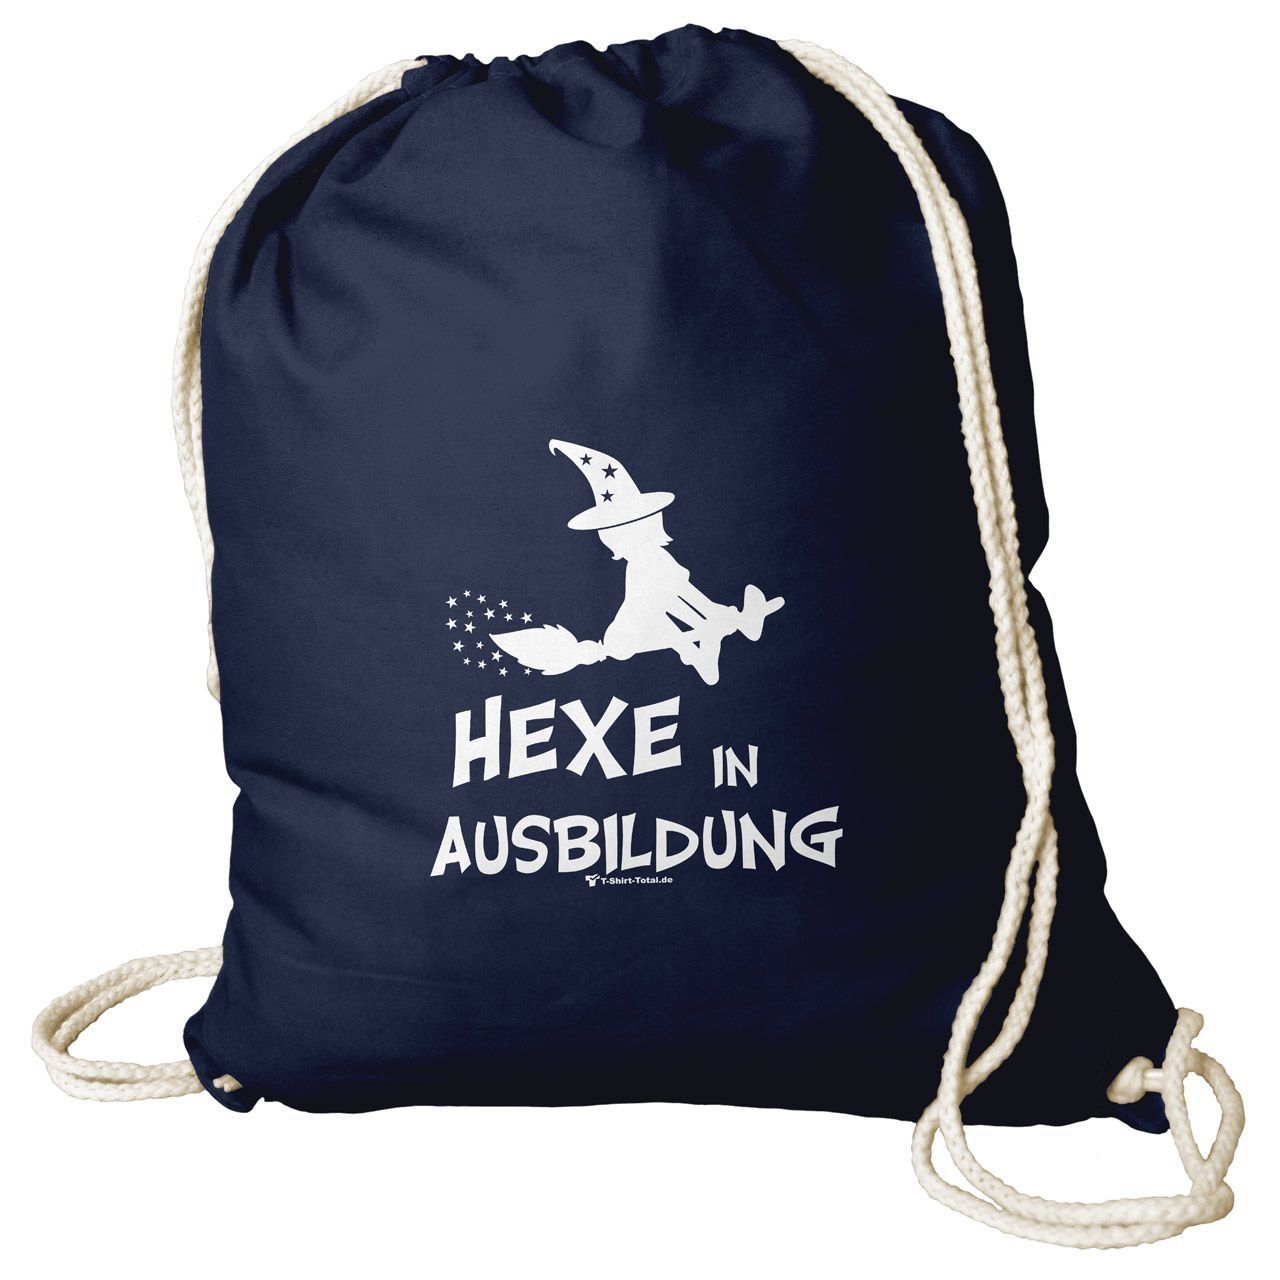 Hexe in Ausbildung Rucksack Beutel navy